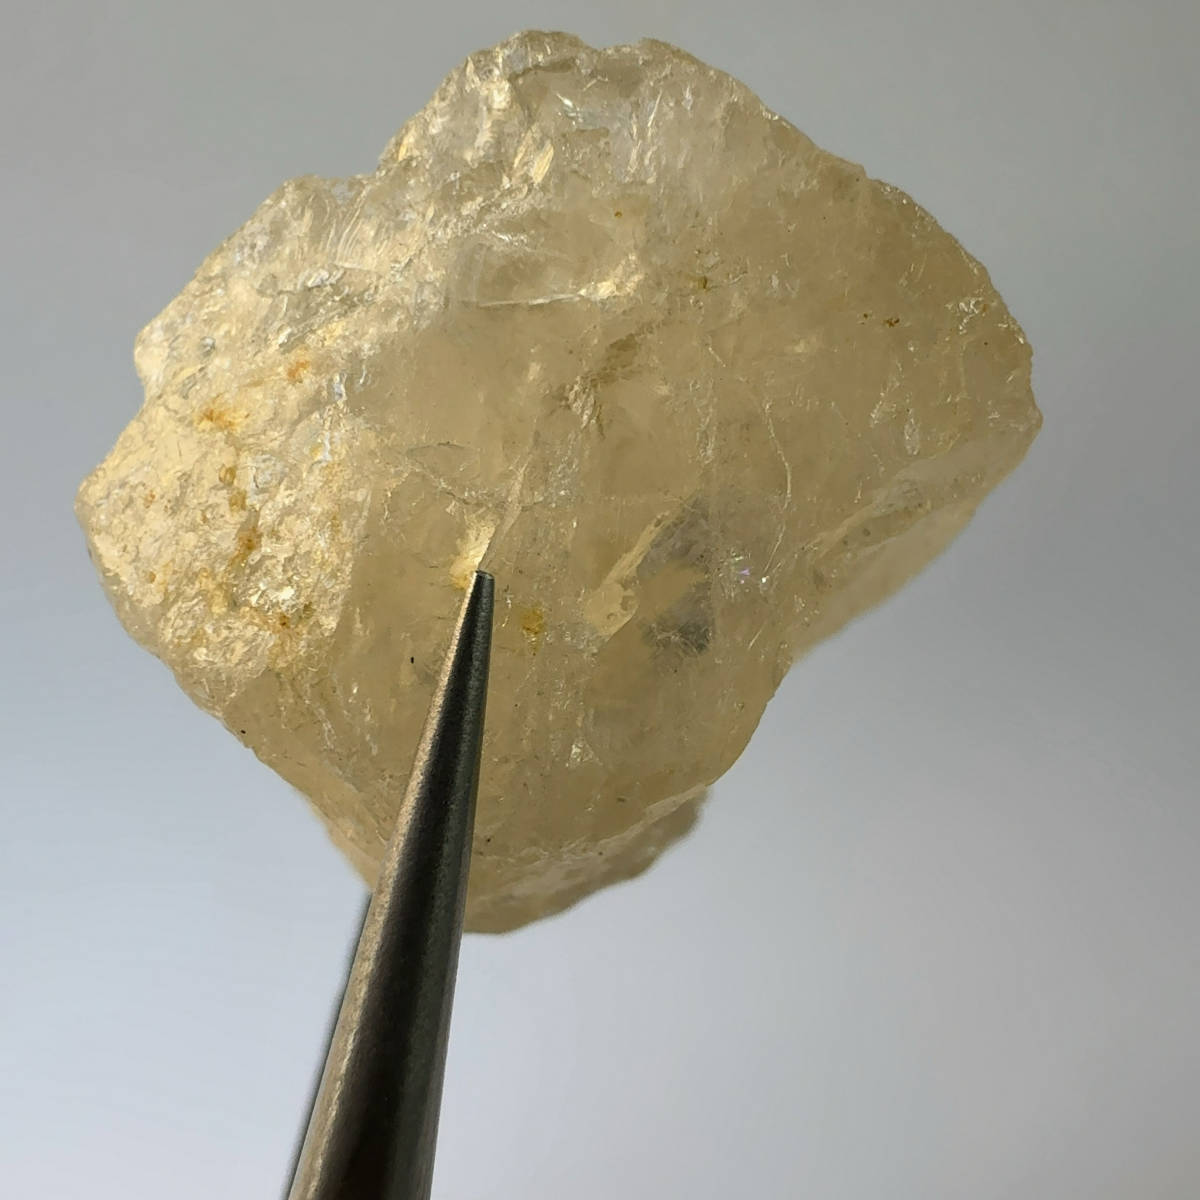 【E23787】 アンブリゴナイト アンブリゴ石 天然石 原石 鉱物 パワーストーン